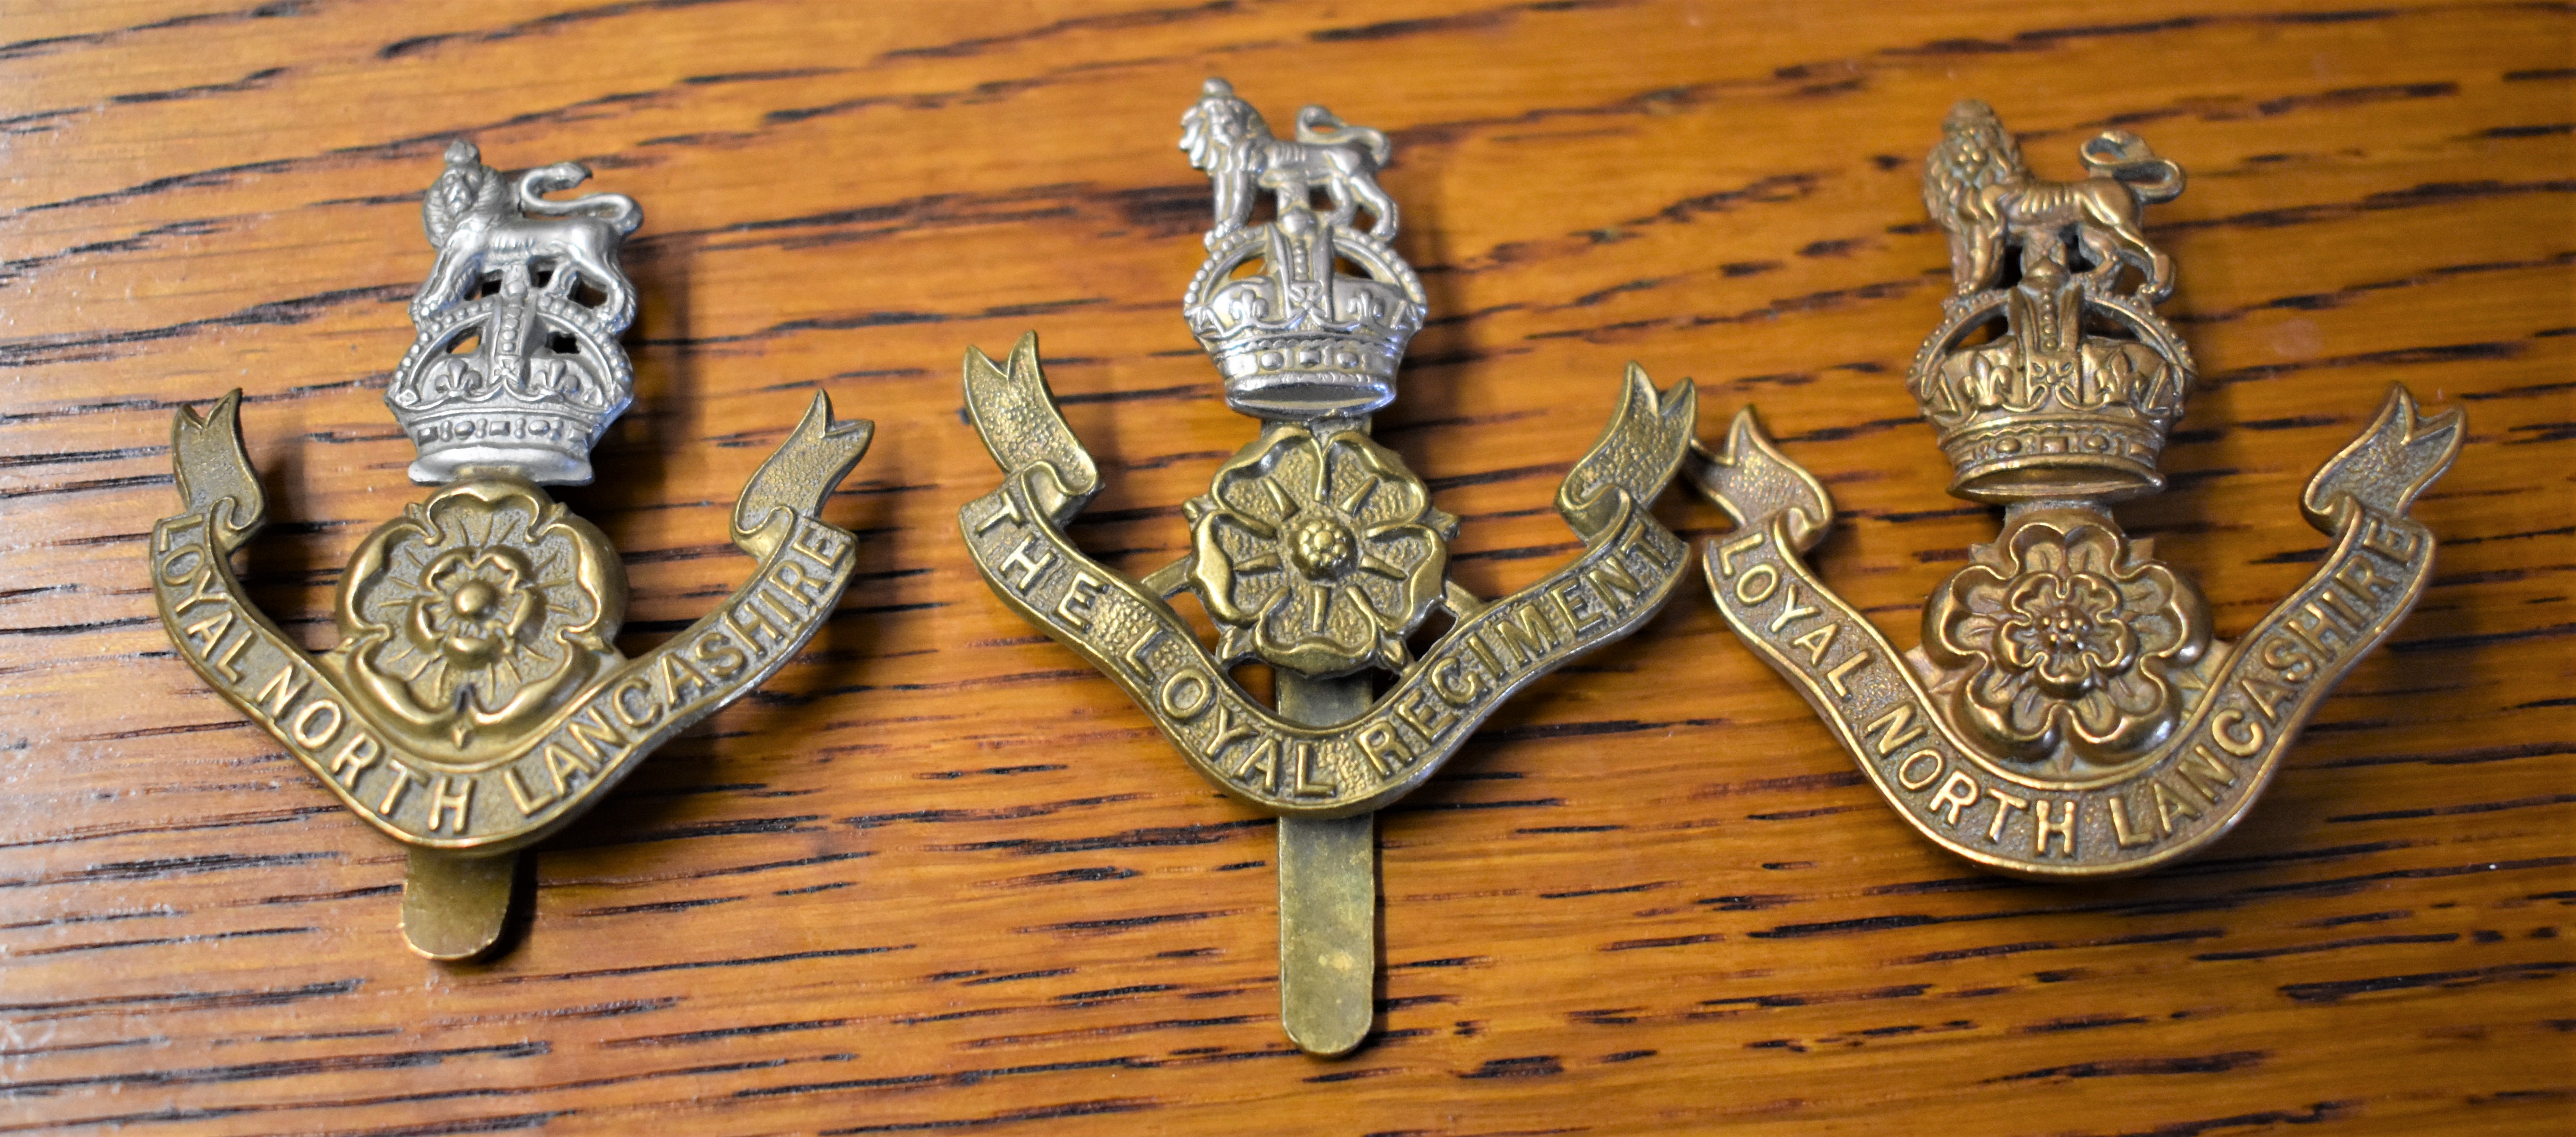 Loyal North Lancashire Regiment WWI Cap Badge (Bi-metal), Slider. K&K: 664-Loyal North Lancashire